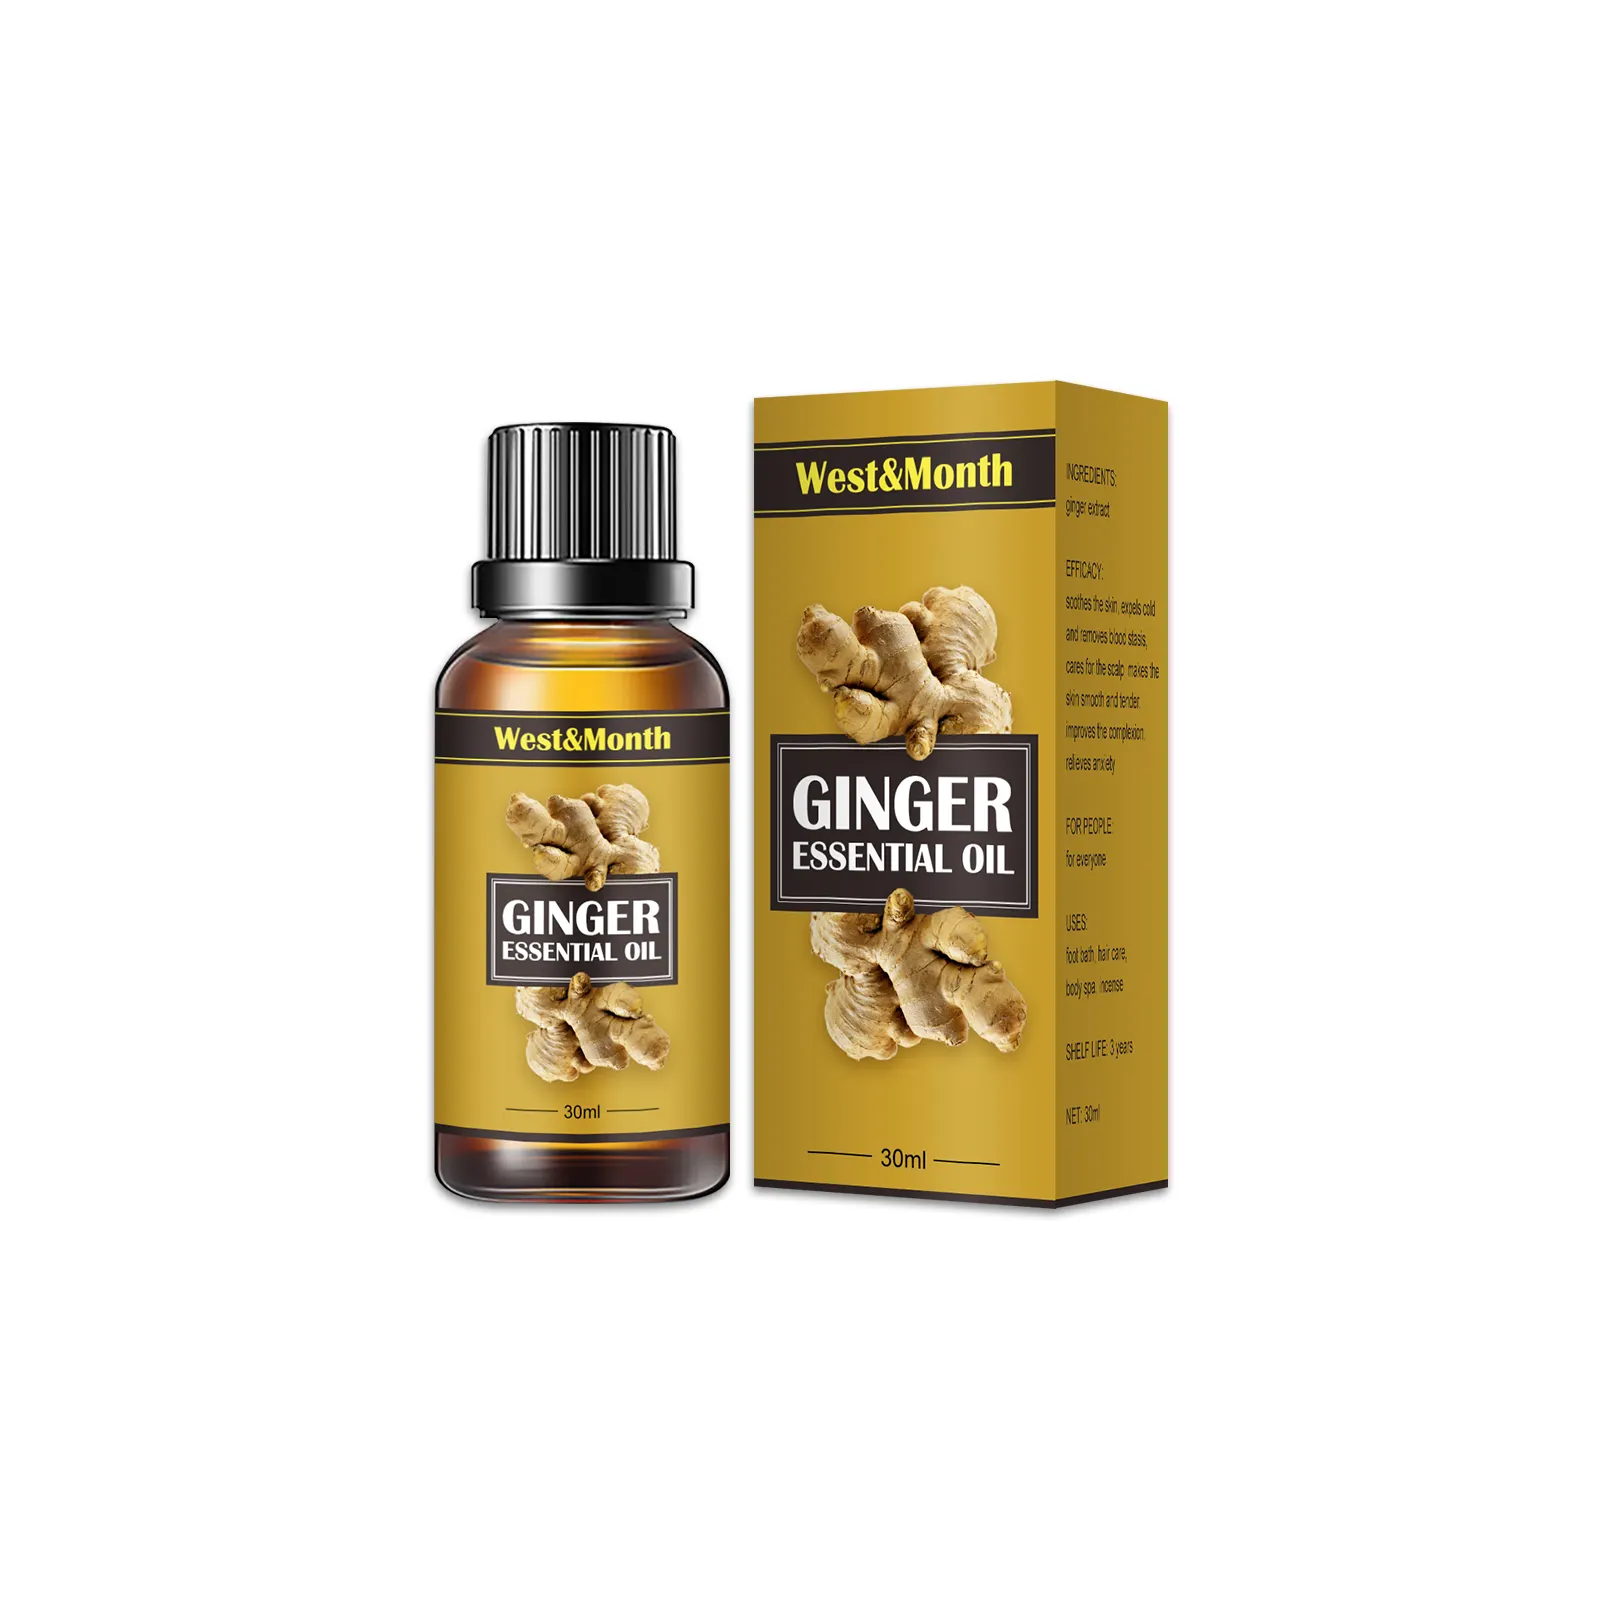 slimming sculpting body essential oil organic ginger oil slimming massage fat burning Body Massage Ginger Oil